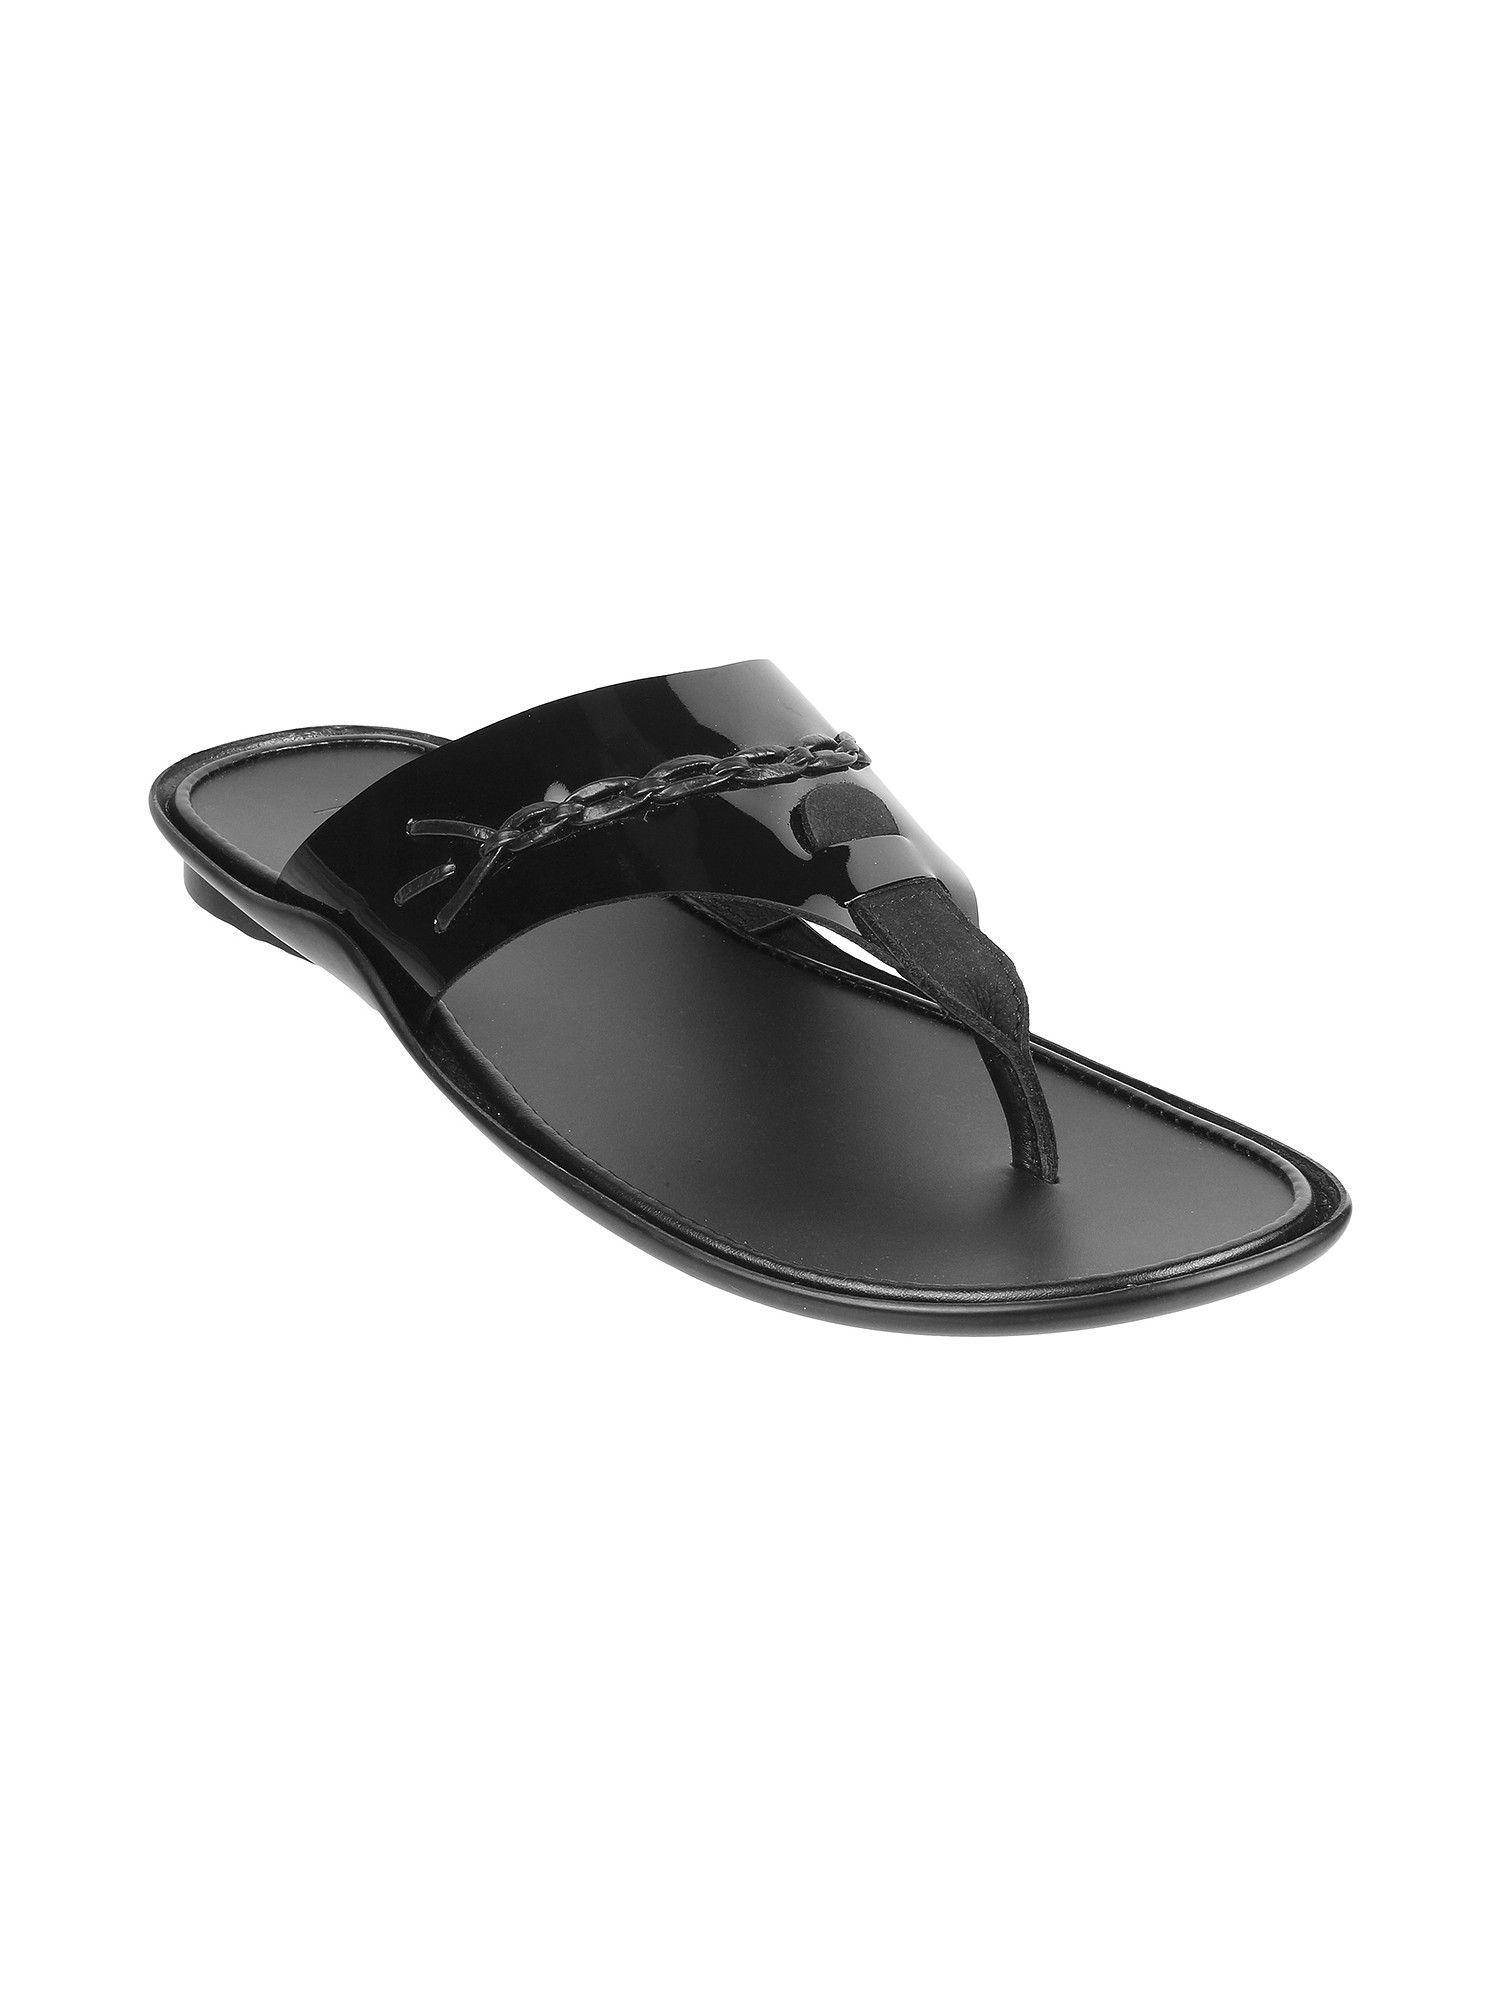 mens-black-flat-chappalsmetro-mens-black-synthetic-solid-plain-sandals